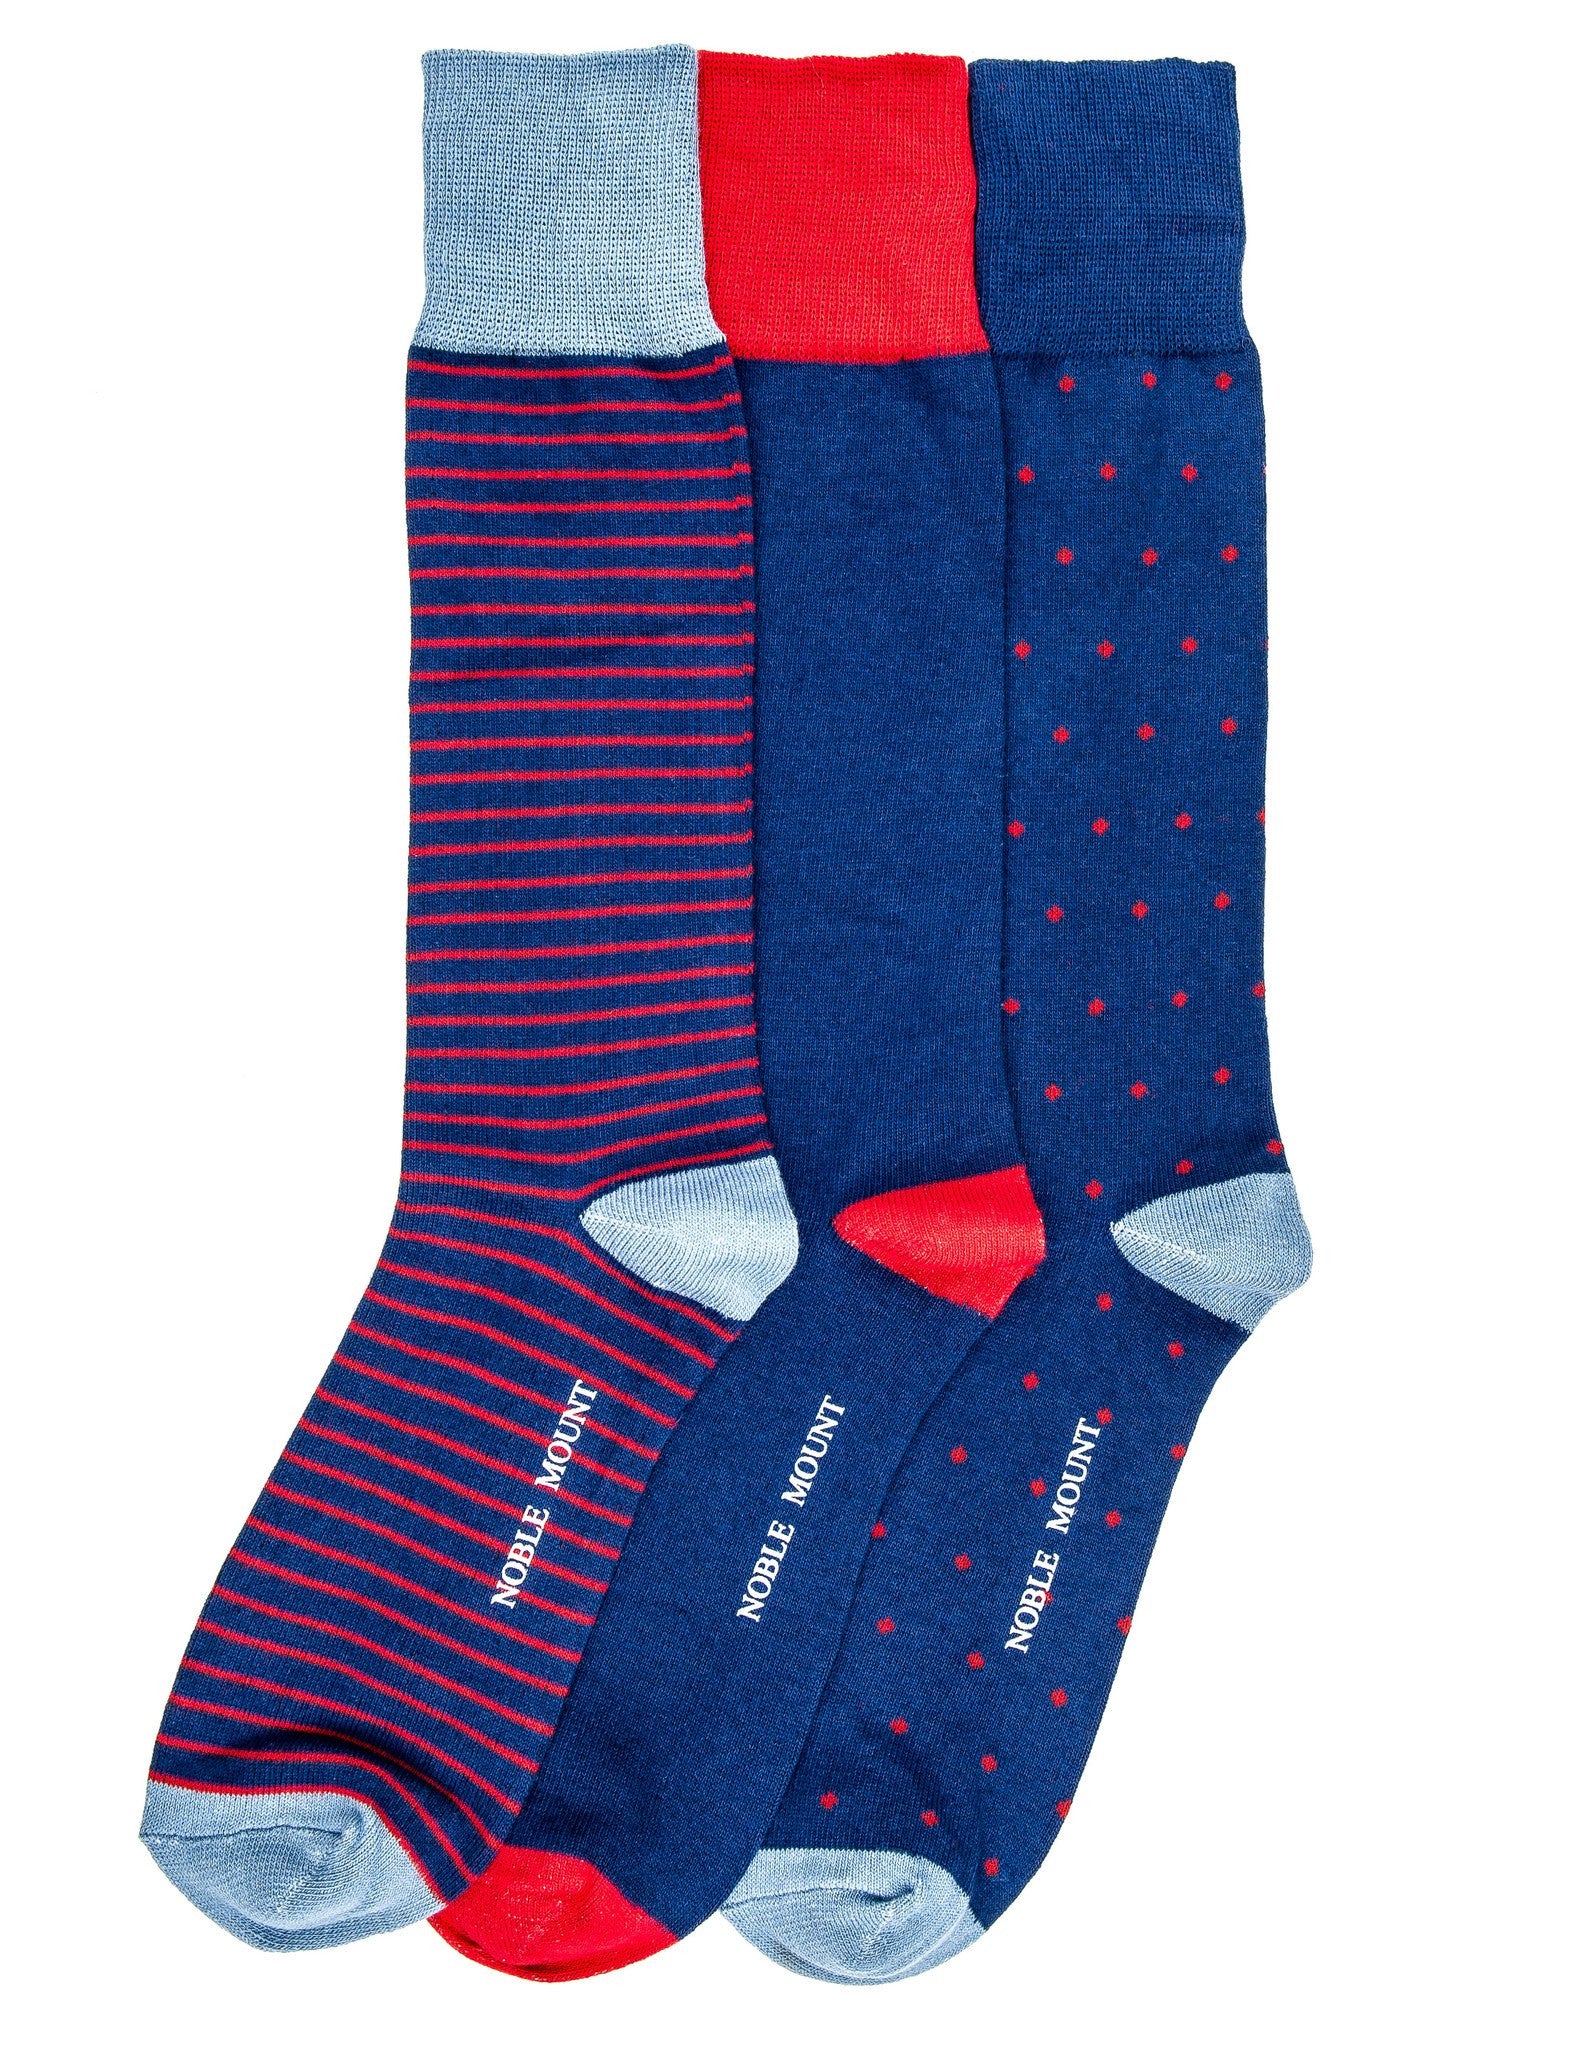 Men's Combed Cotton Dress Socks 3-Pack